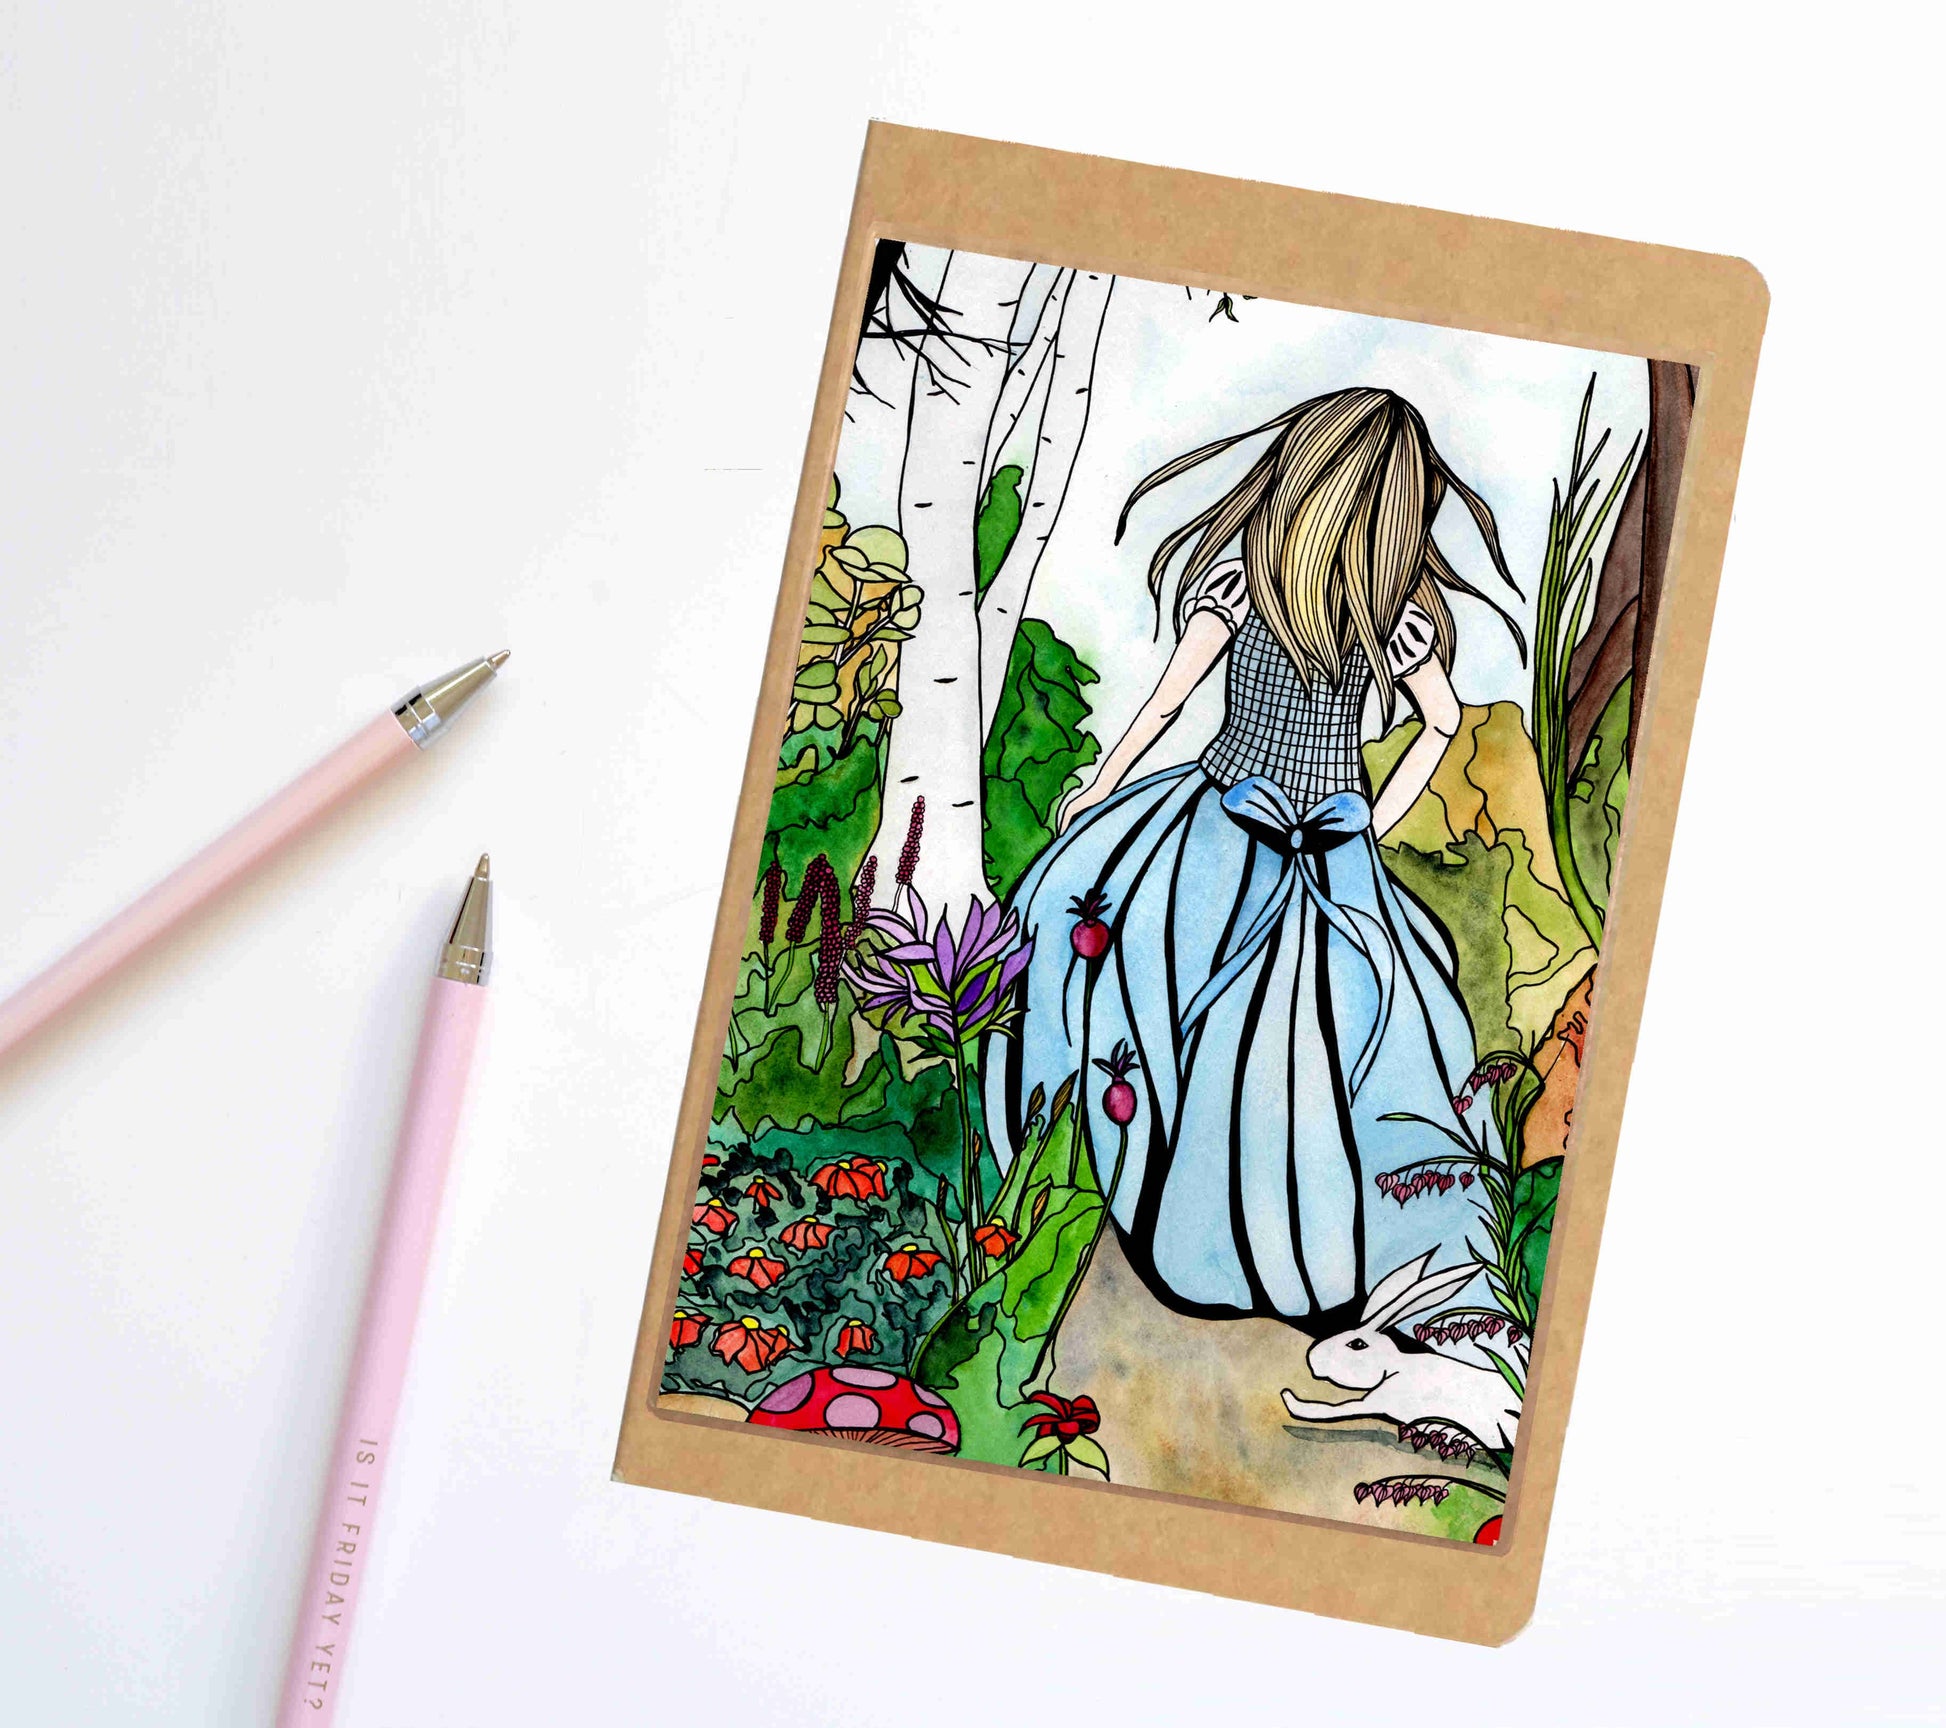 Alice Wonderland Inspired Notebook / Sketchbook / Journal